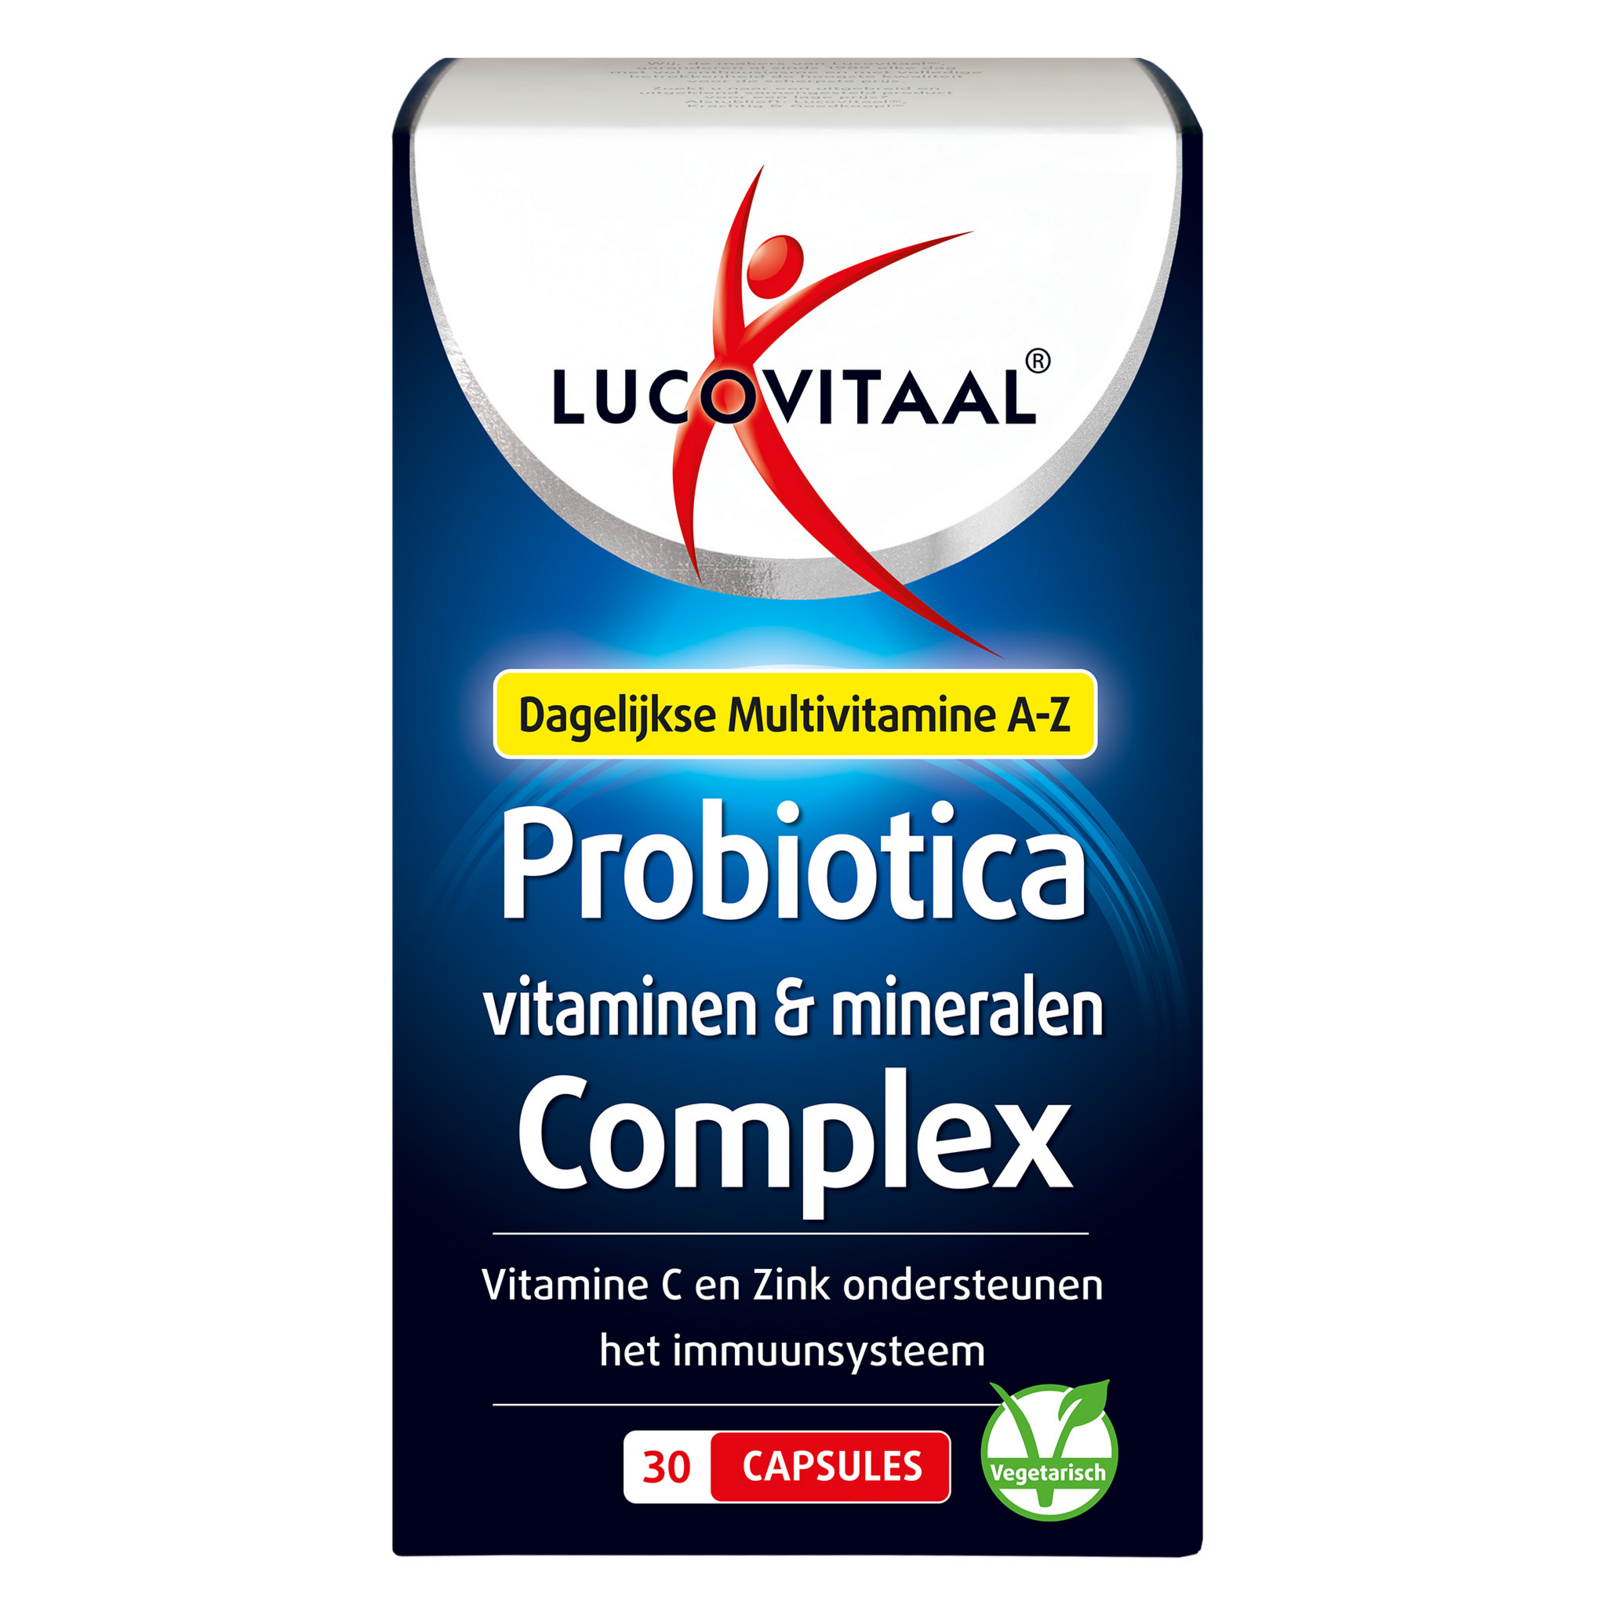 Lucovitaal Lucovitaal Probiotica Vitaminen & Mineralen Complex Capsules